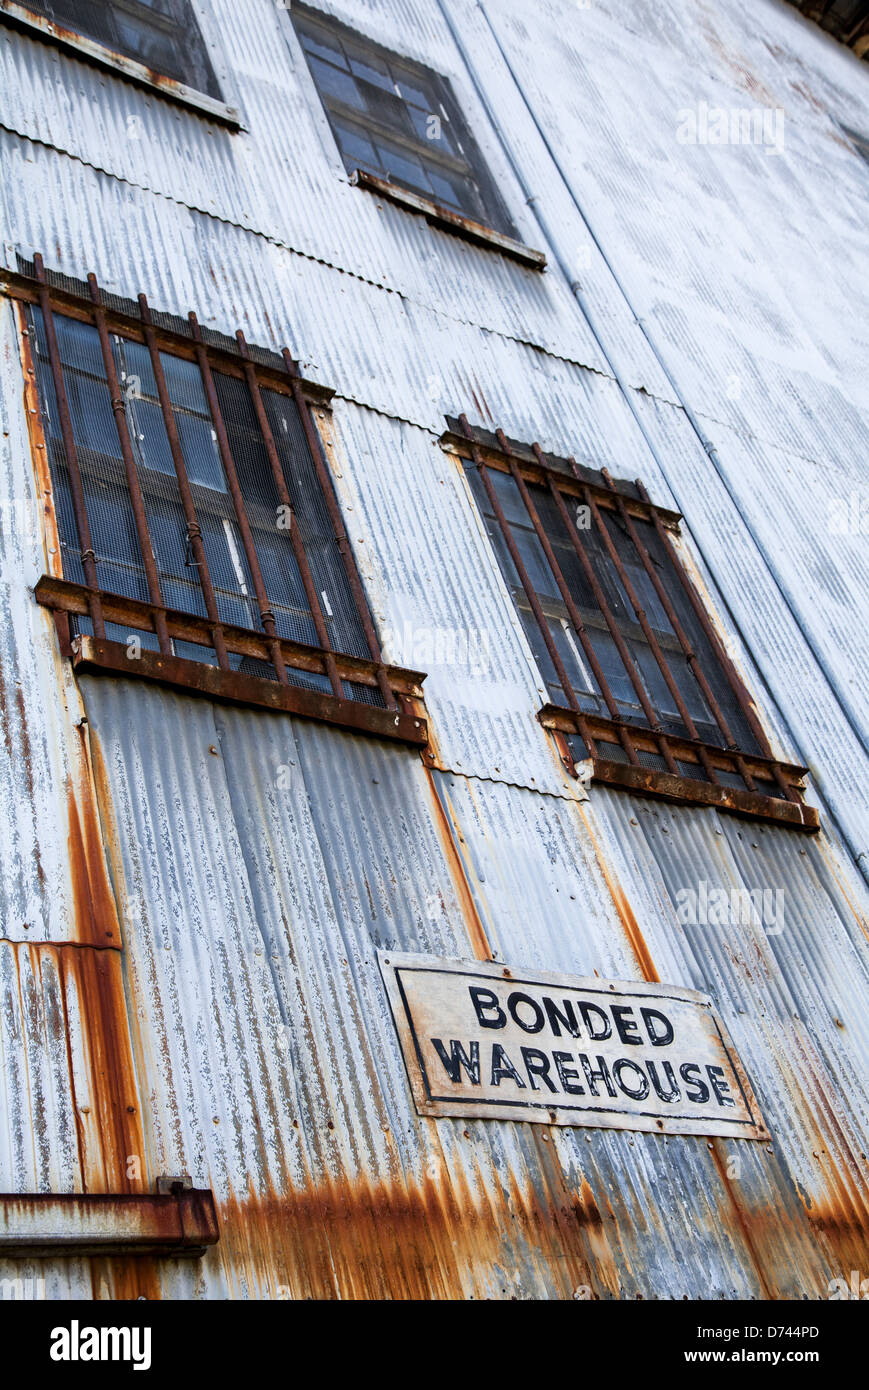 Bonded warehouse for kentucky bourbon barrels Stock Photo